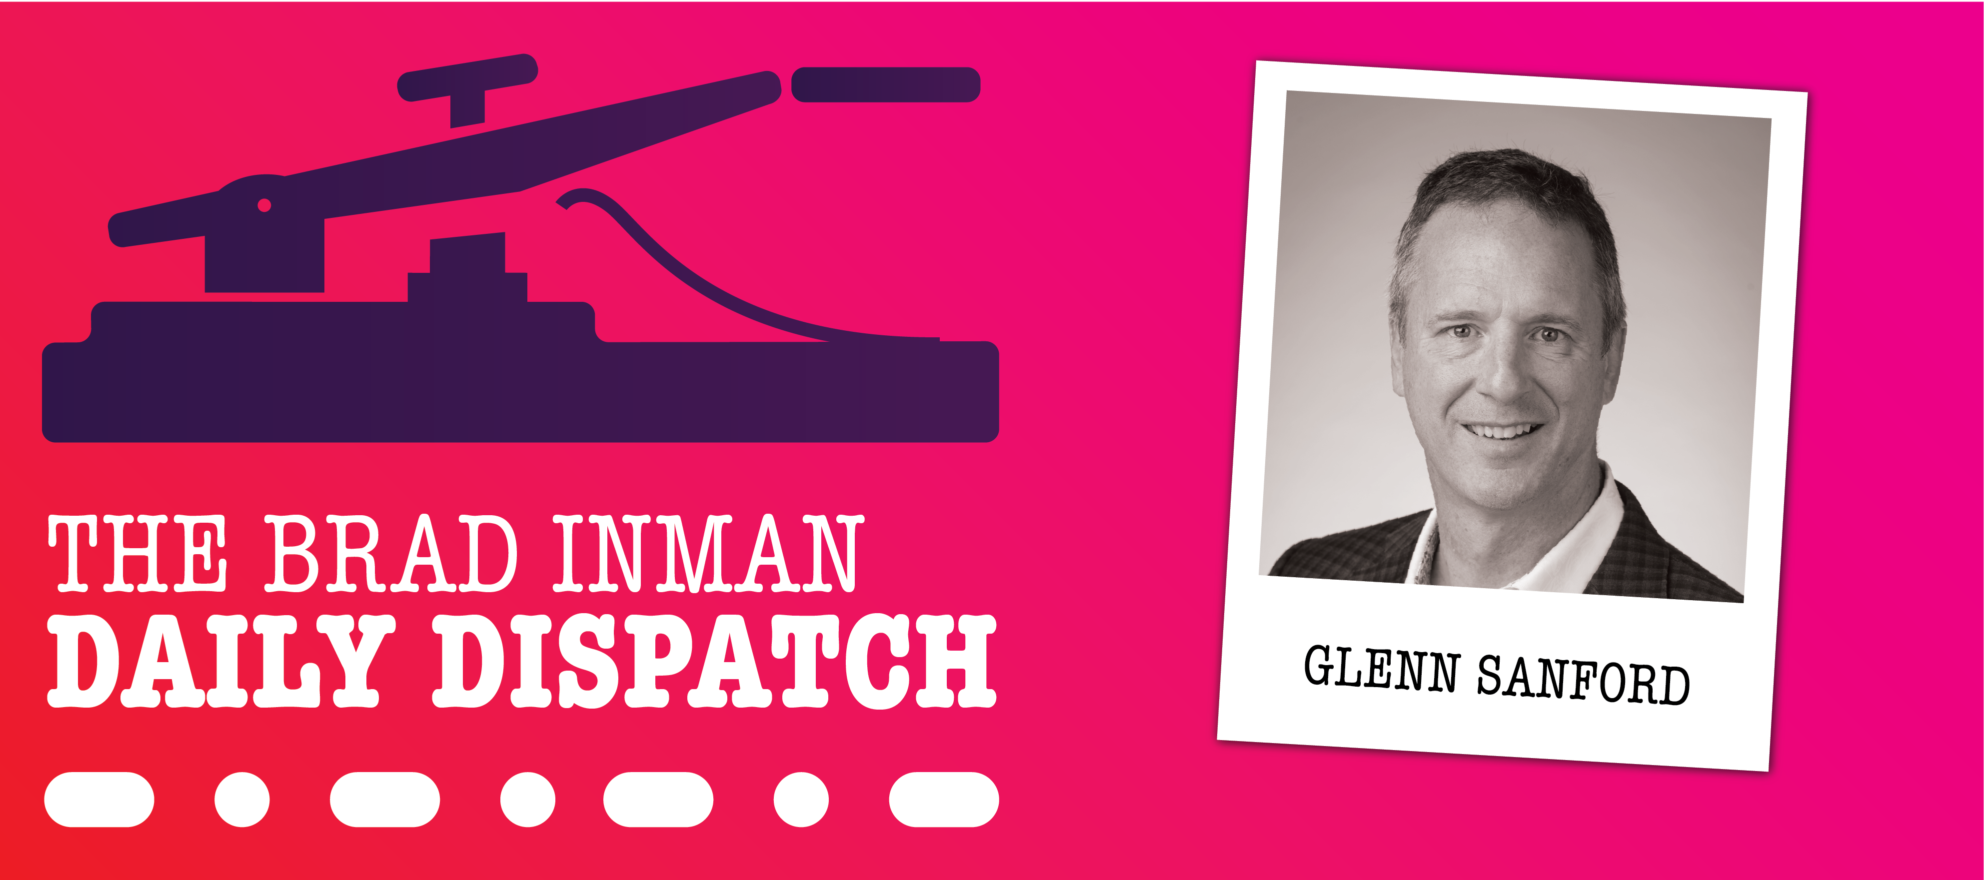 Daily Dispatch: Brad Inman with Glenn Sanford